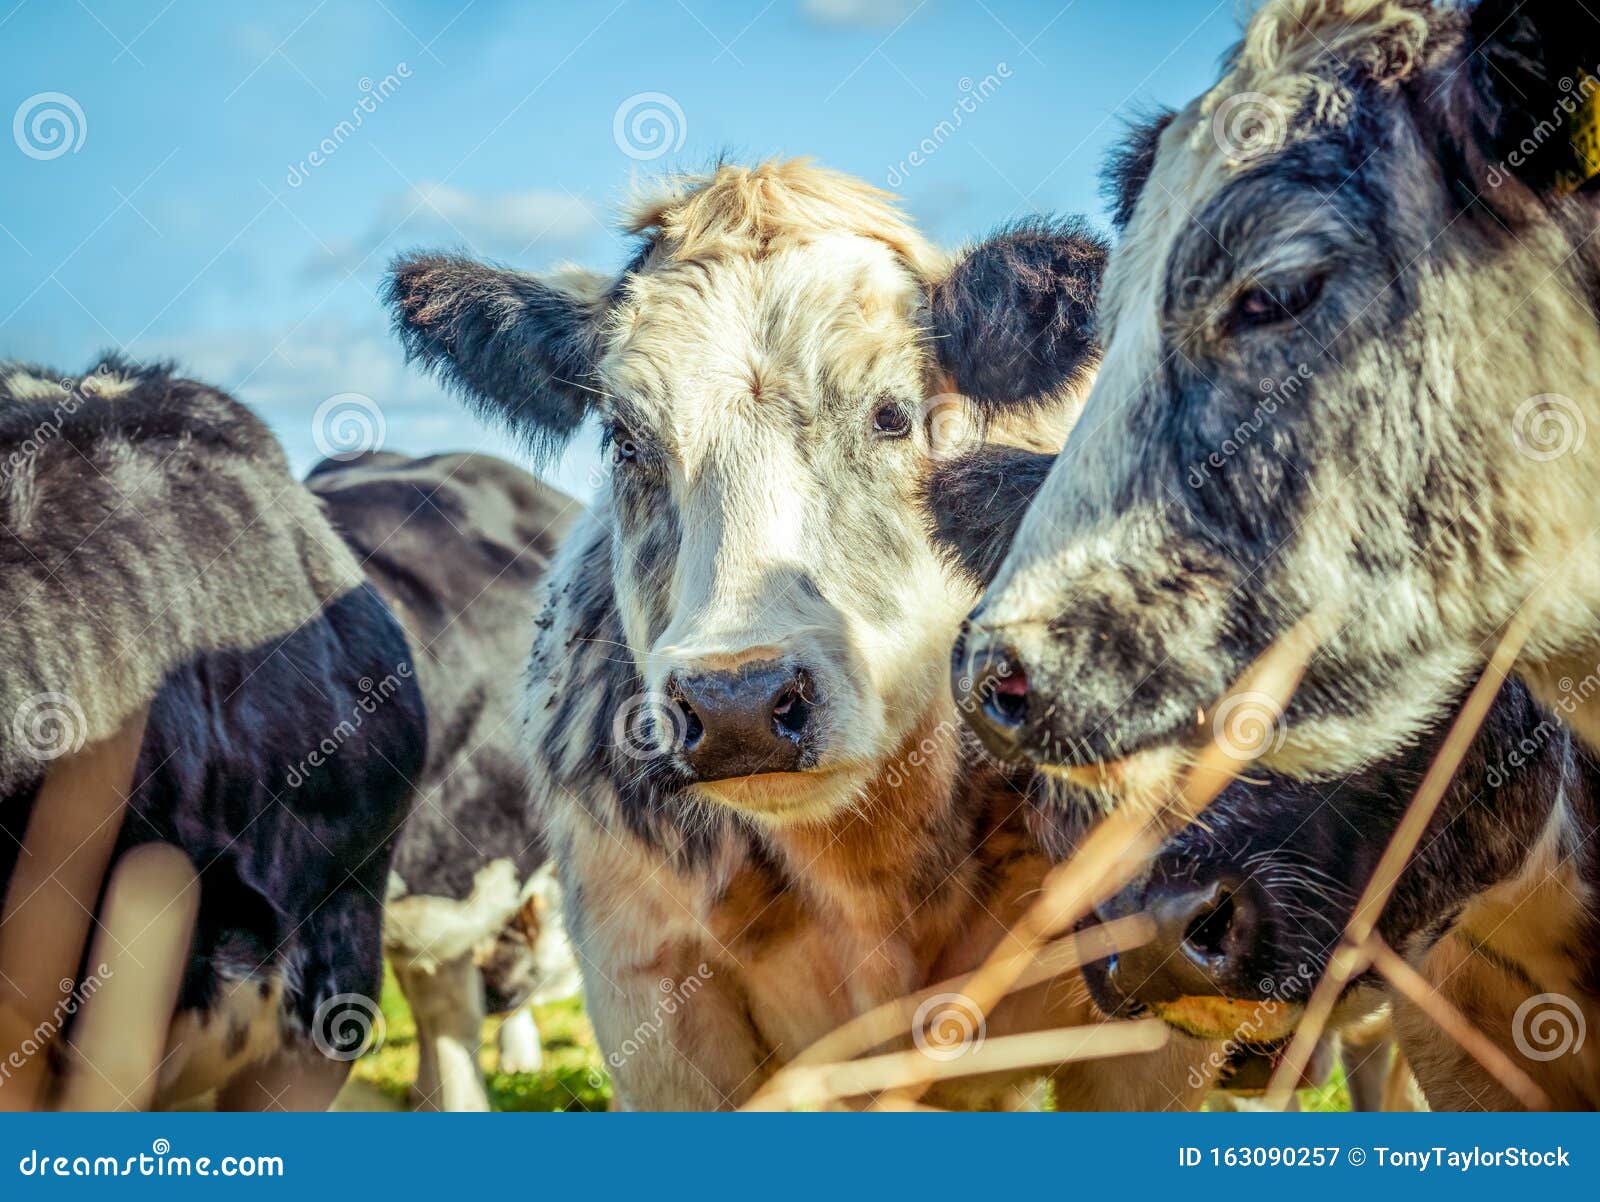 Sleepy Looking Shaggy Cow Huddled Together Stock Image - Image of ...